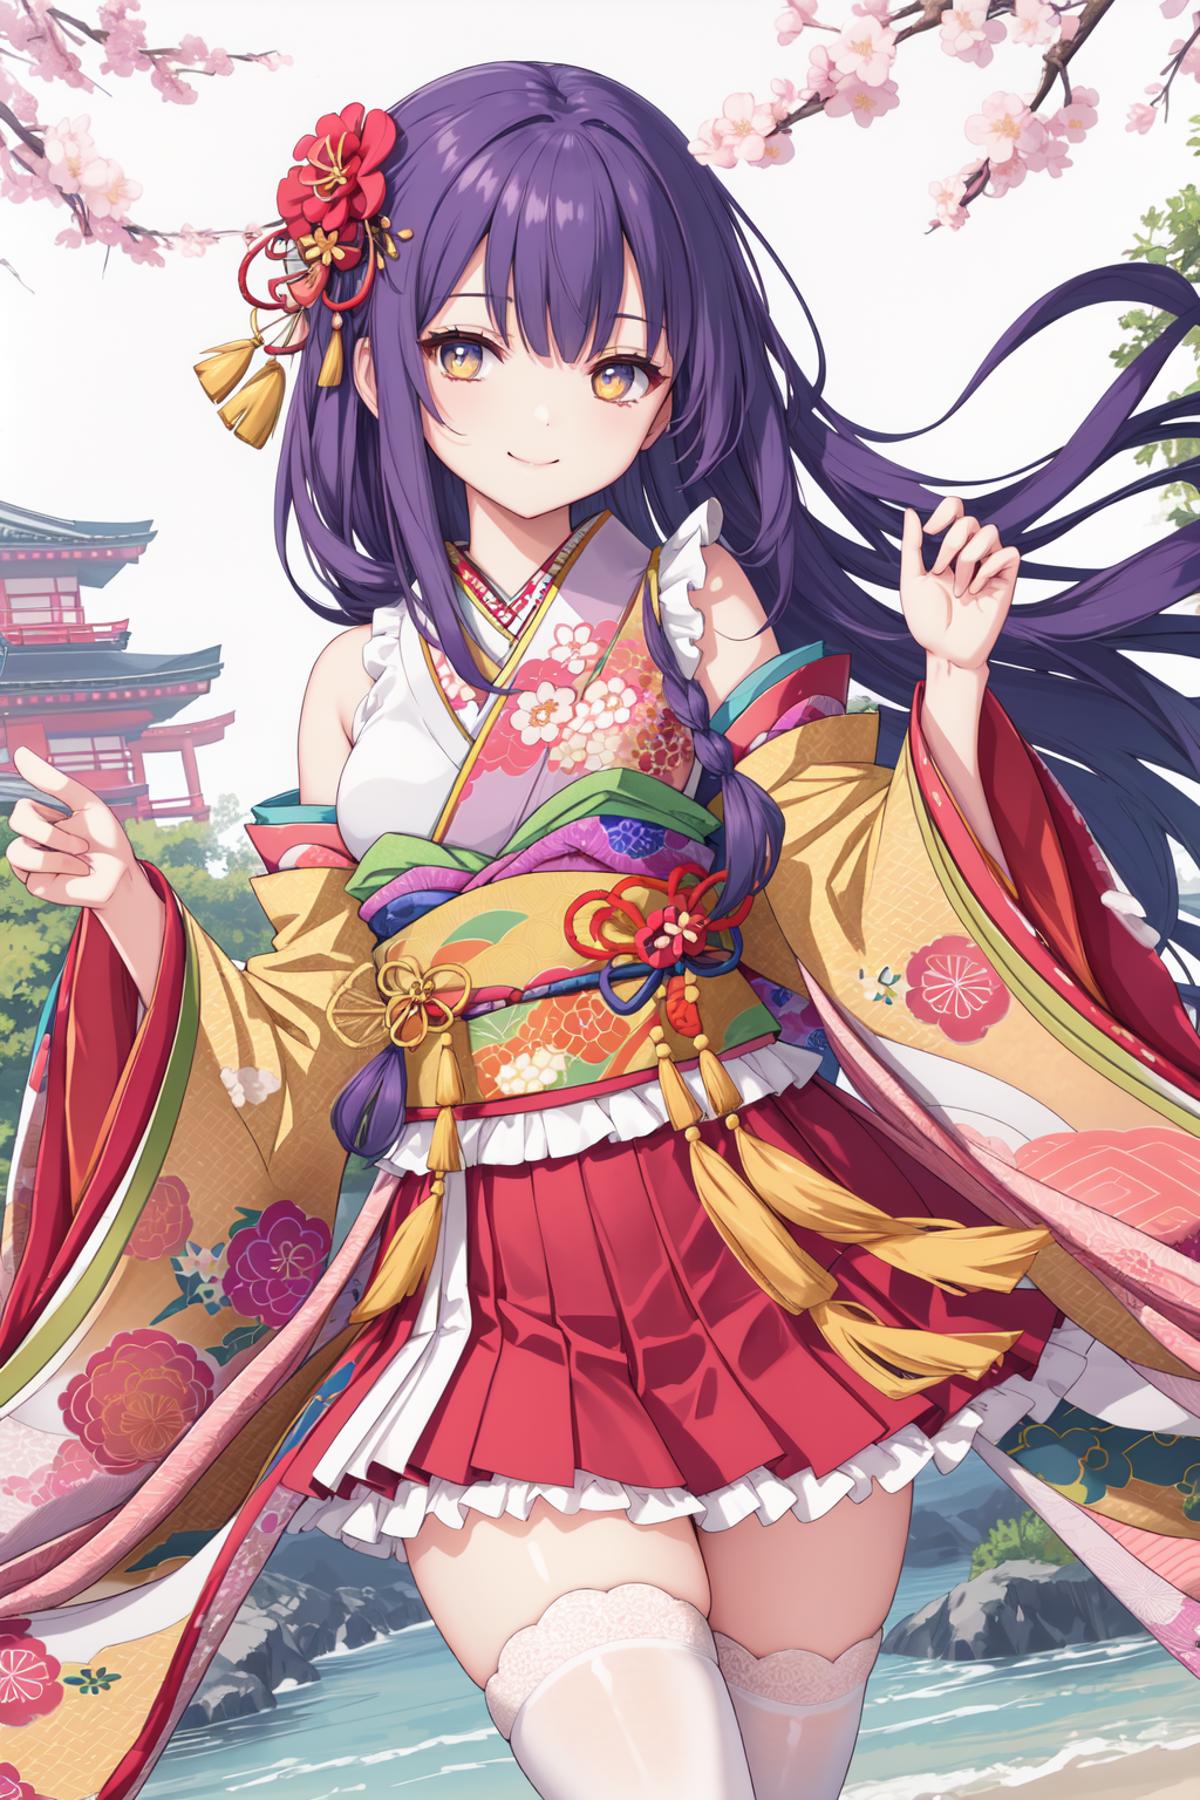 costume cute kimono image by KKTT6783